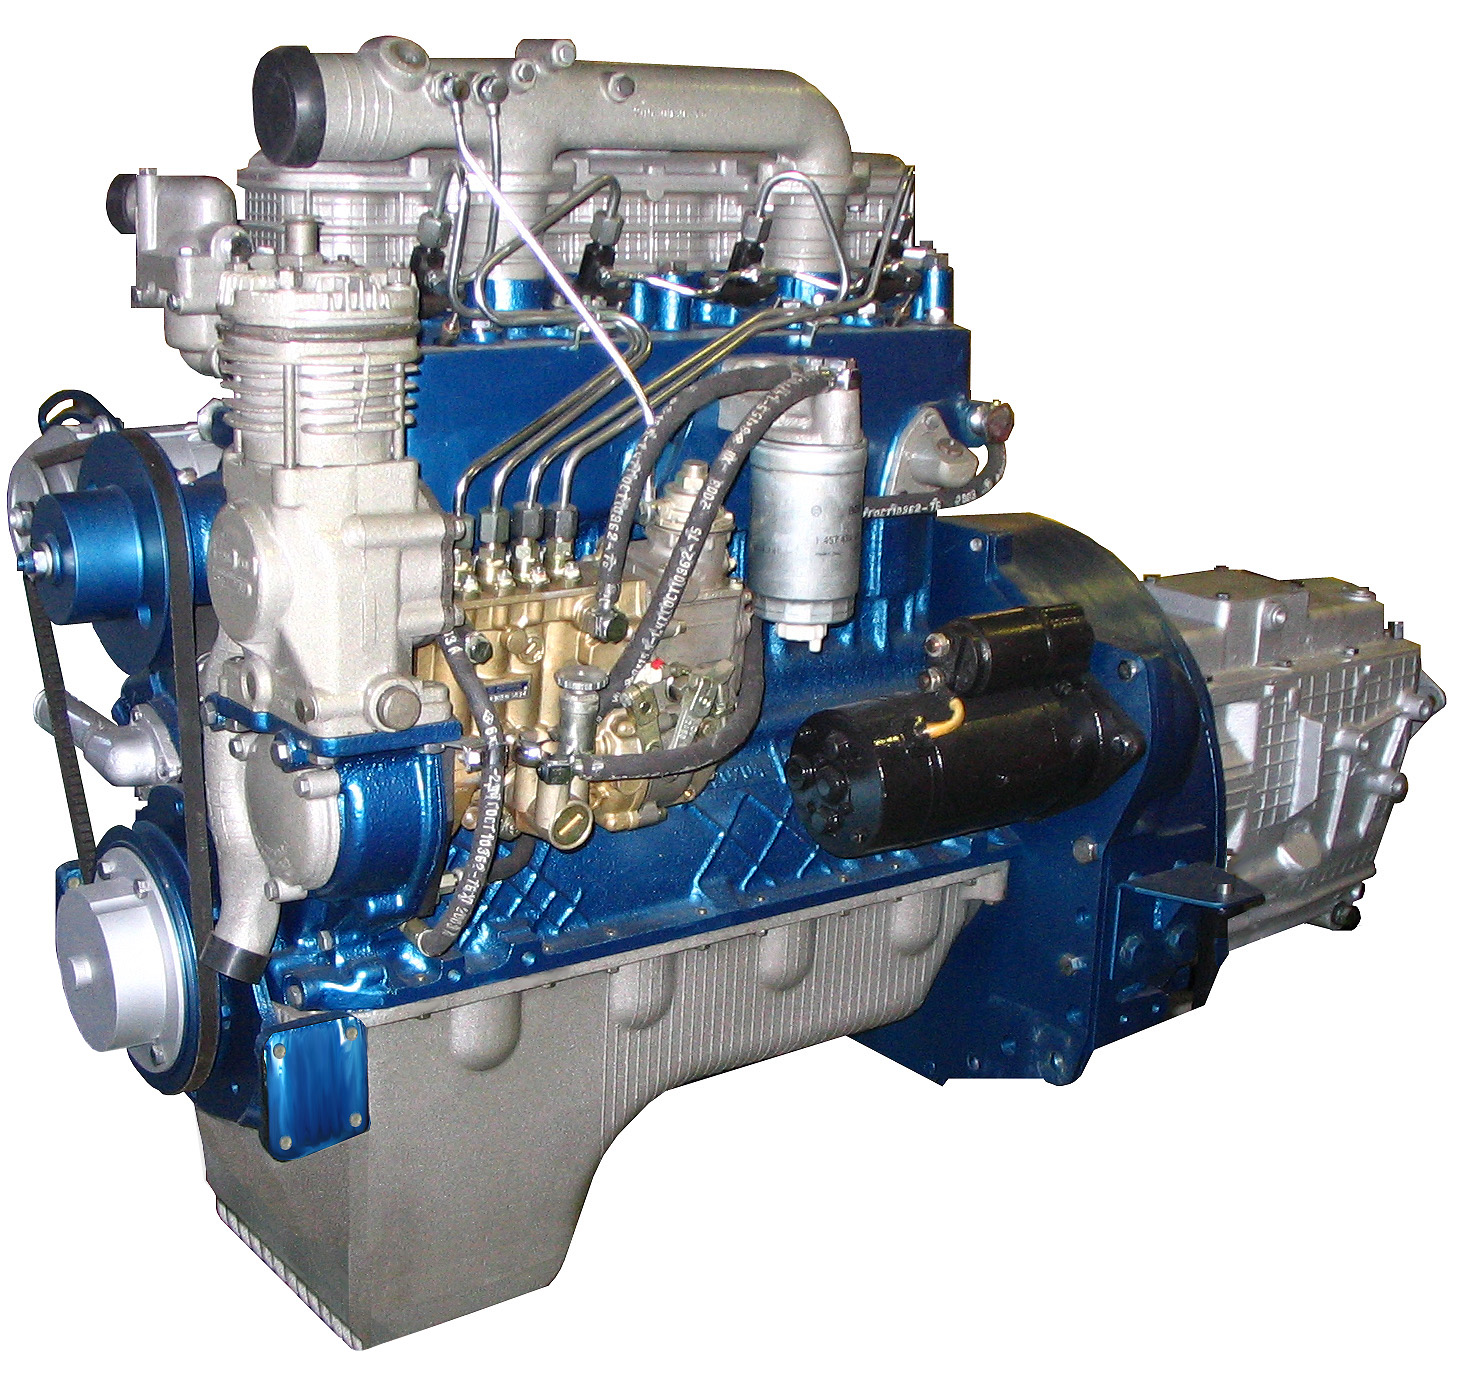 Двигателя мтз д 243. Двигатель ММЗ Д-245. Двигатель ММЗ 245 евро 2. Двигатель ММЗ Д-245.7. Двигатель ММЗ Д245.7е2.